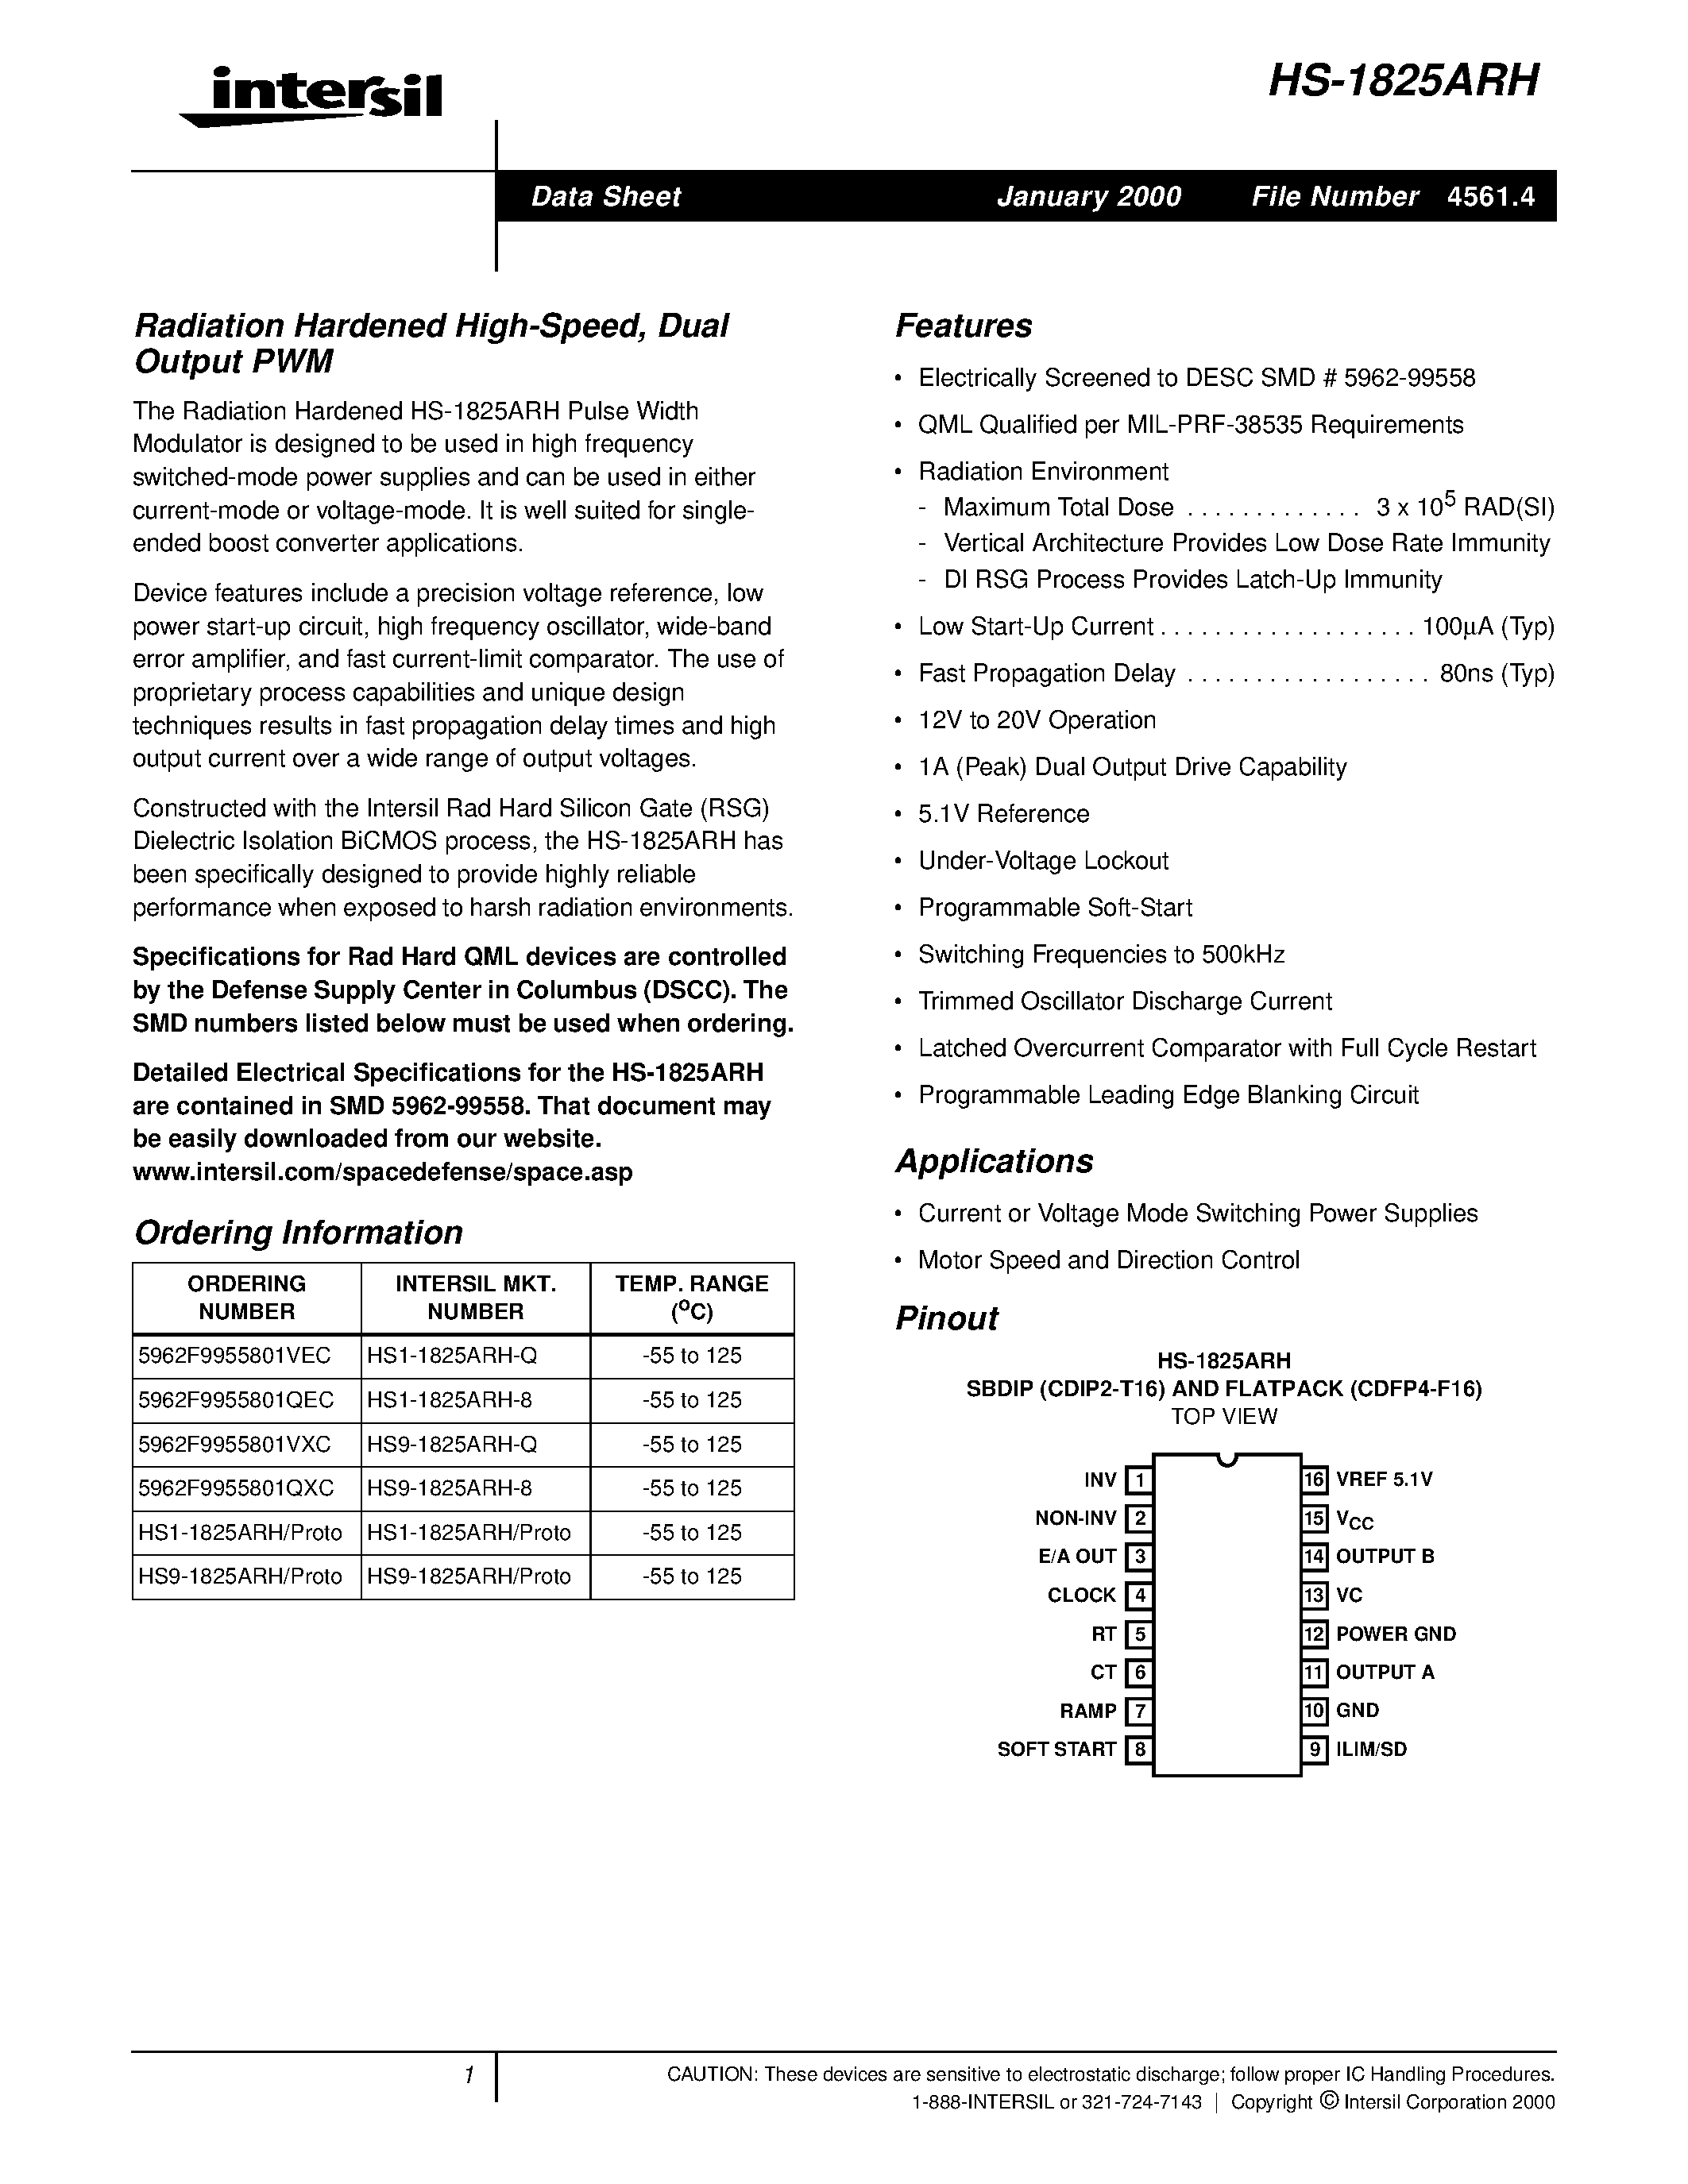 Даташит HS1-1825ARH-Q-Radiation Hardened High-Speed/ Dual Output PWM страница 1